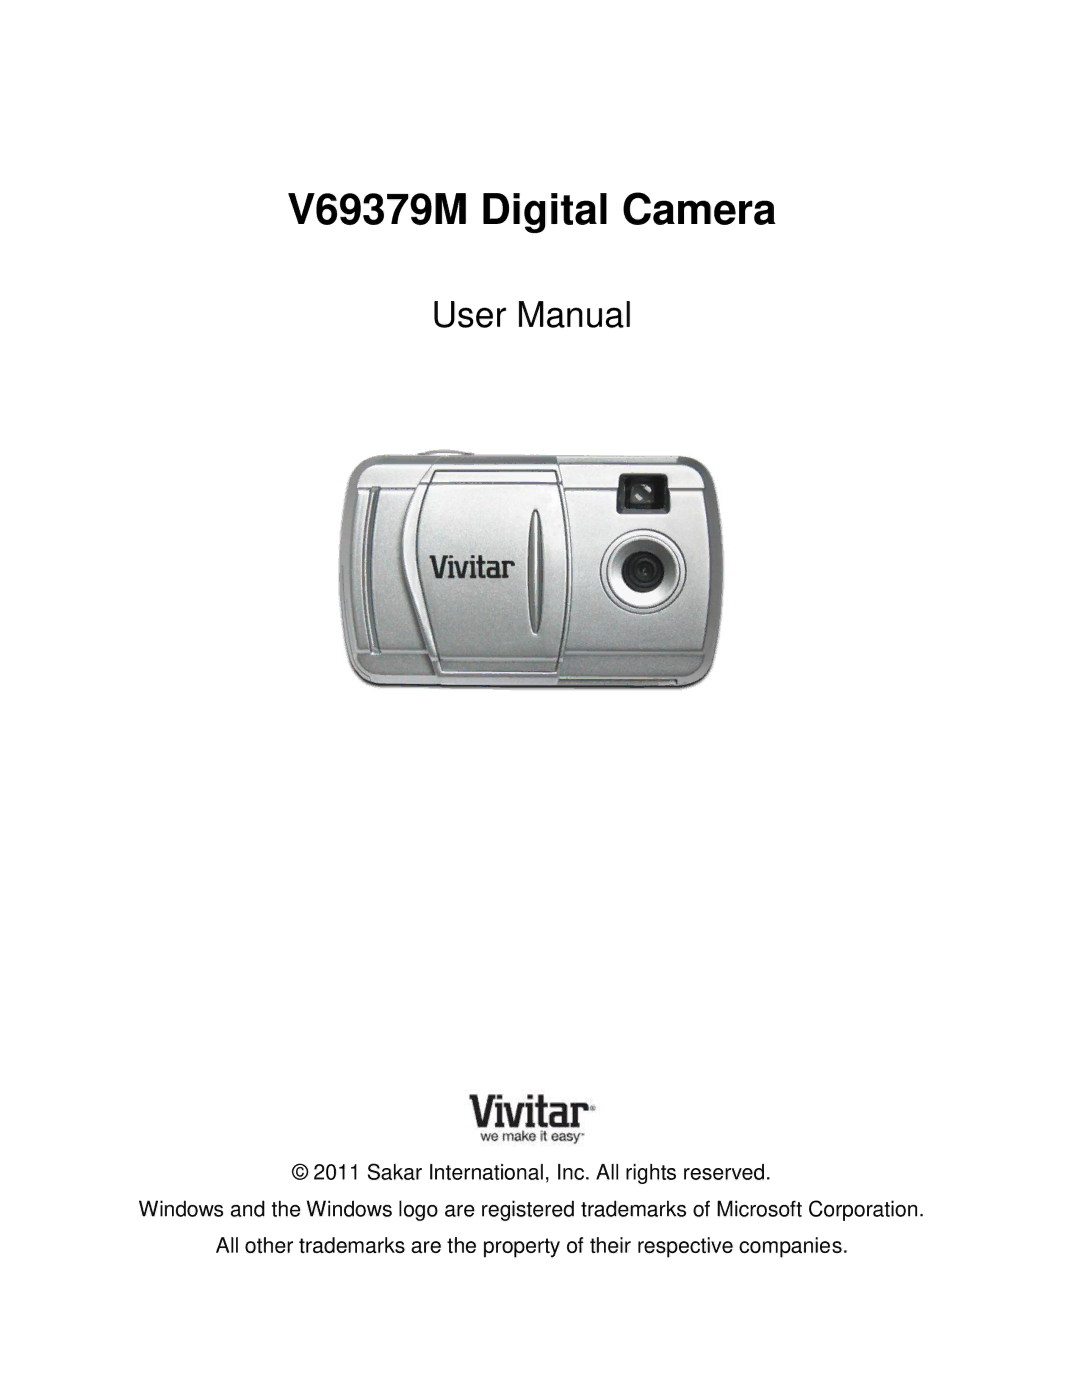 Vivitar user manual V69379M Digital Camera 